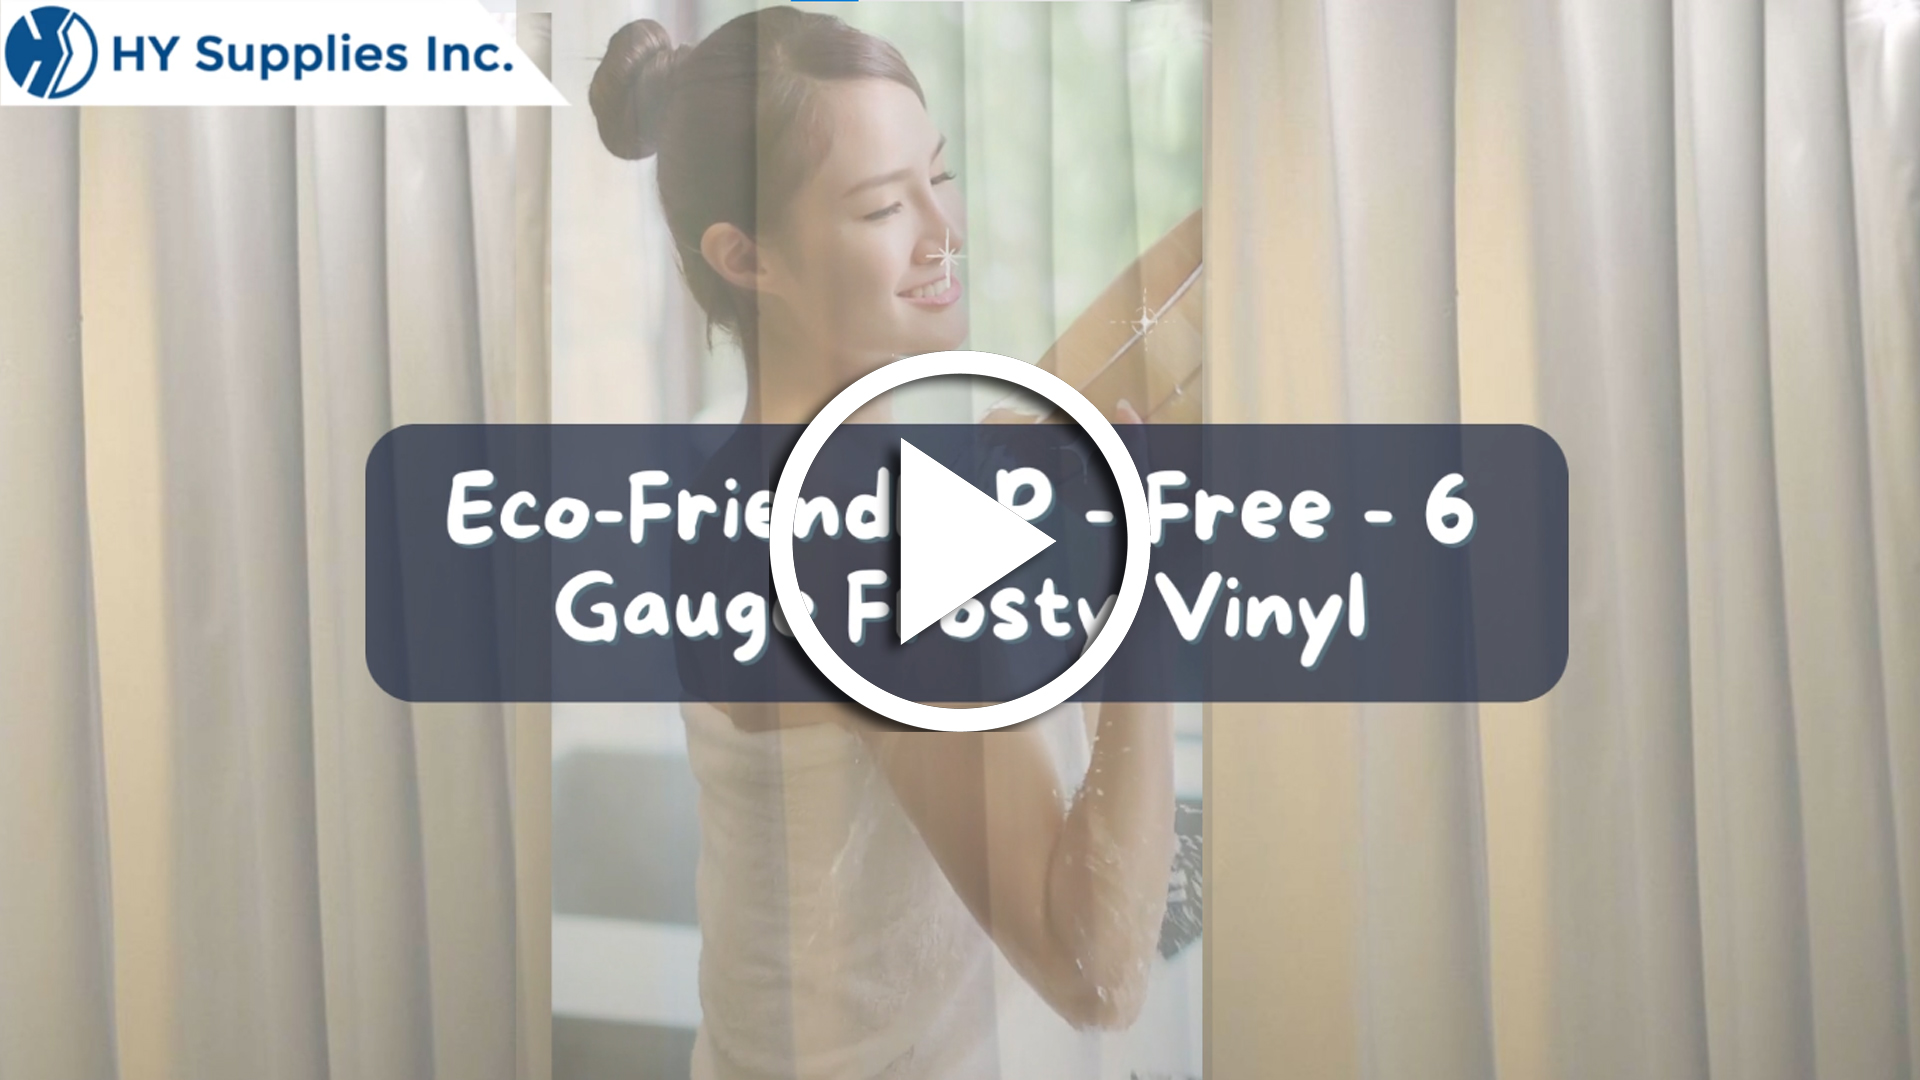 Eco-Friendly P - FREE - 6 GAUGE FROSTY VINYL